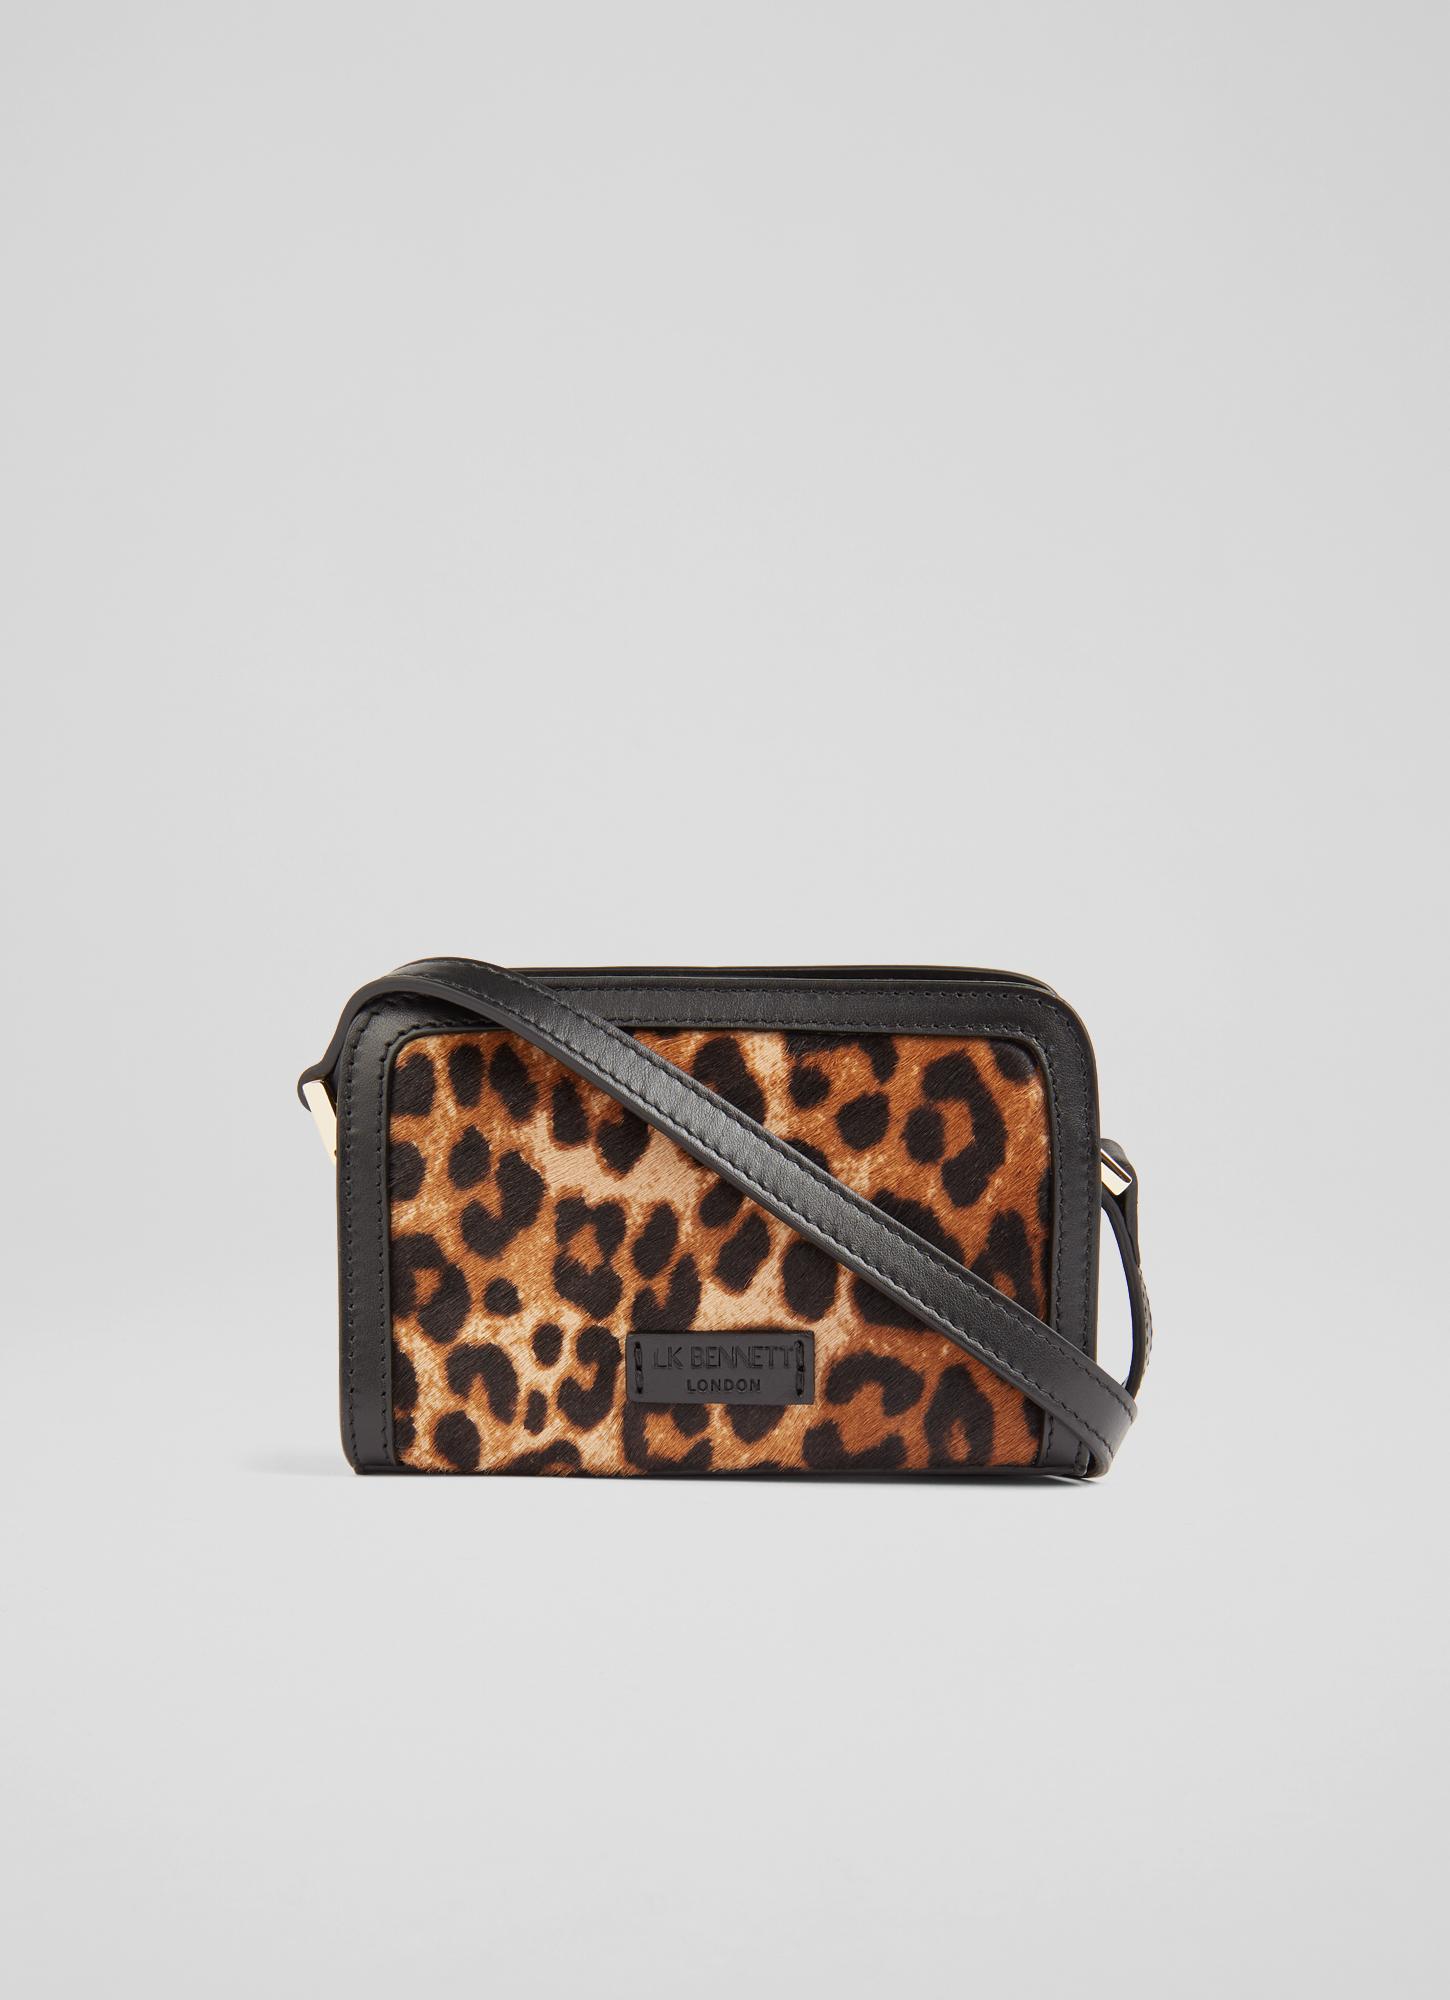 Claire's Leopard Print Crossbody Bags for Women | Mercari